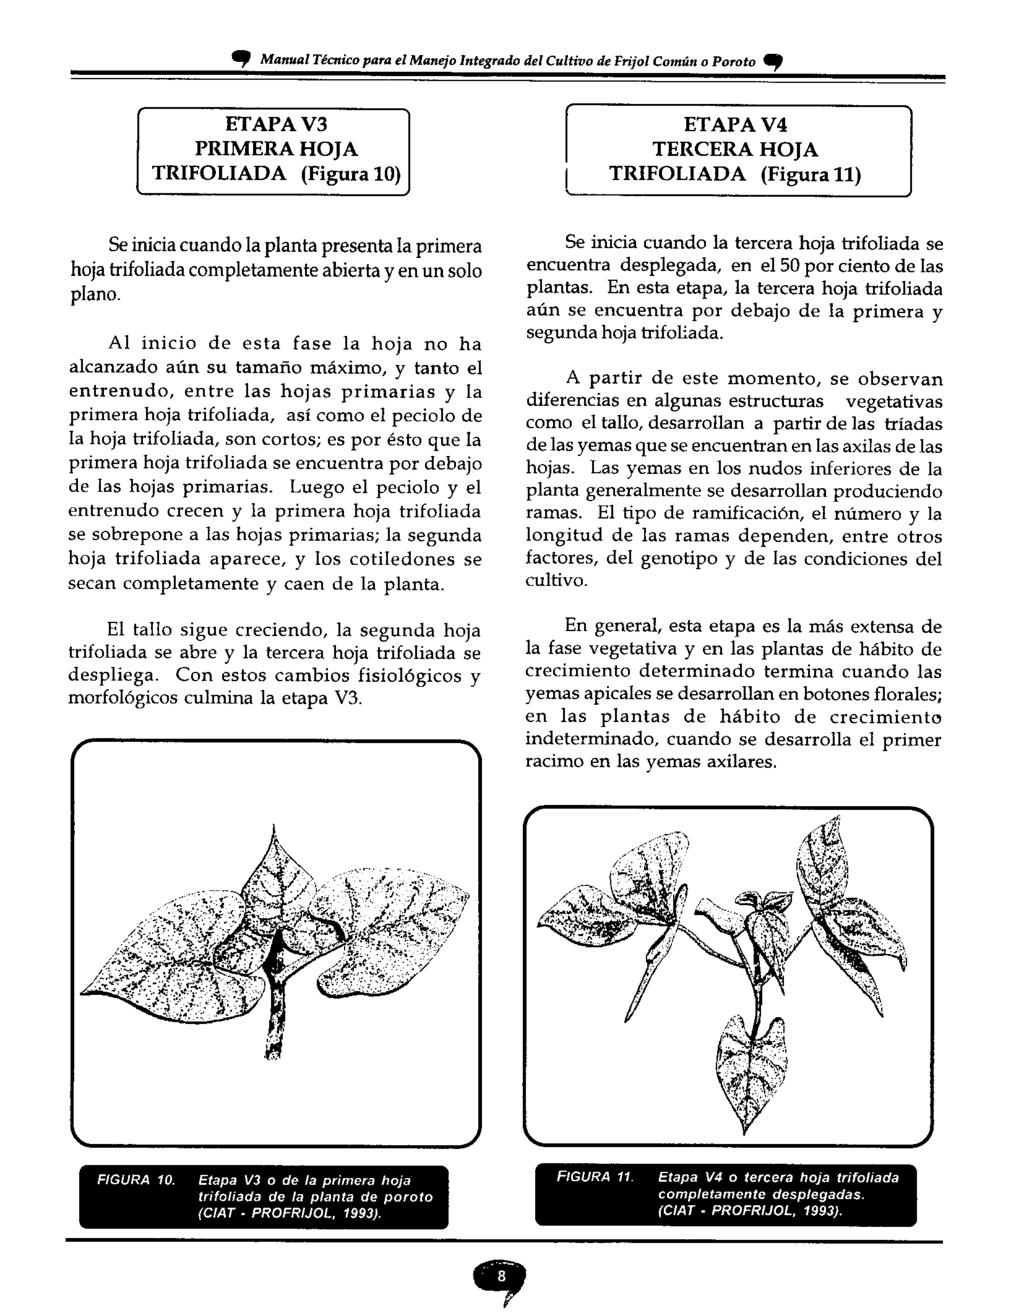 Manual Técnico para el Manejo Integrado del Cultivo de Frijol Común o Poroto, ETAPA V3 PRIMERA HOJA TRIFOLIADA (Figura 10) ETAPA V4 TERCERA HOJA TRIFOLIADA (Figura 11) Se inicia cuando la planta